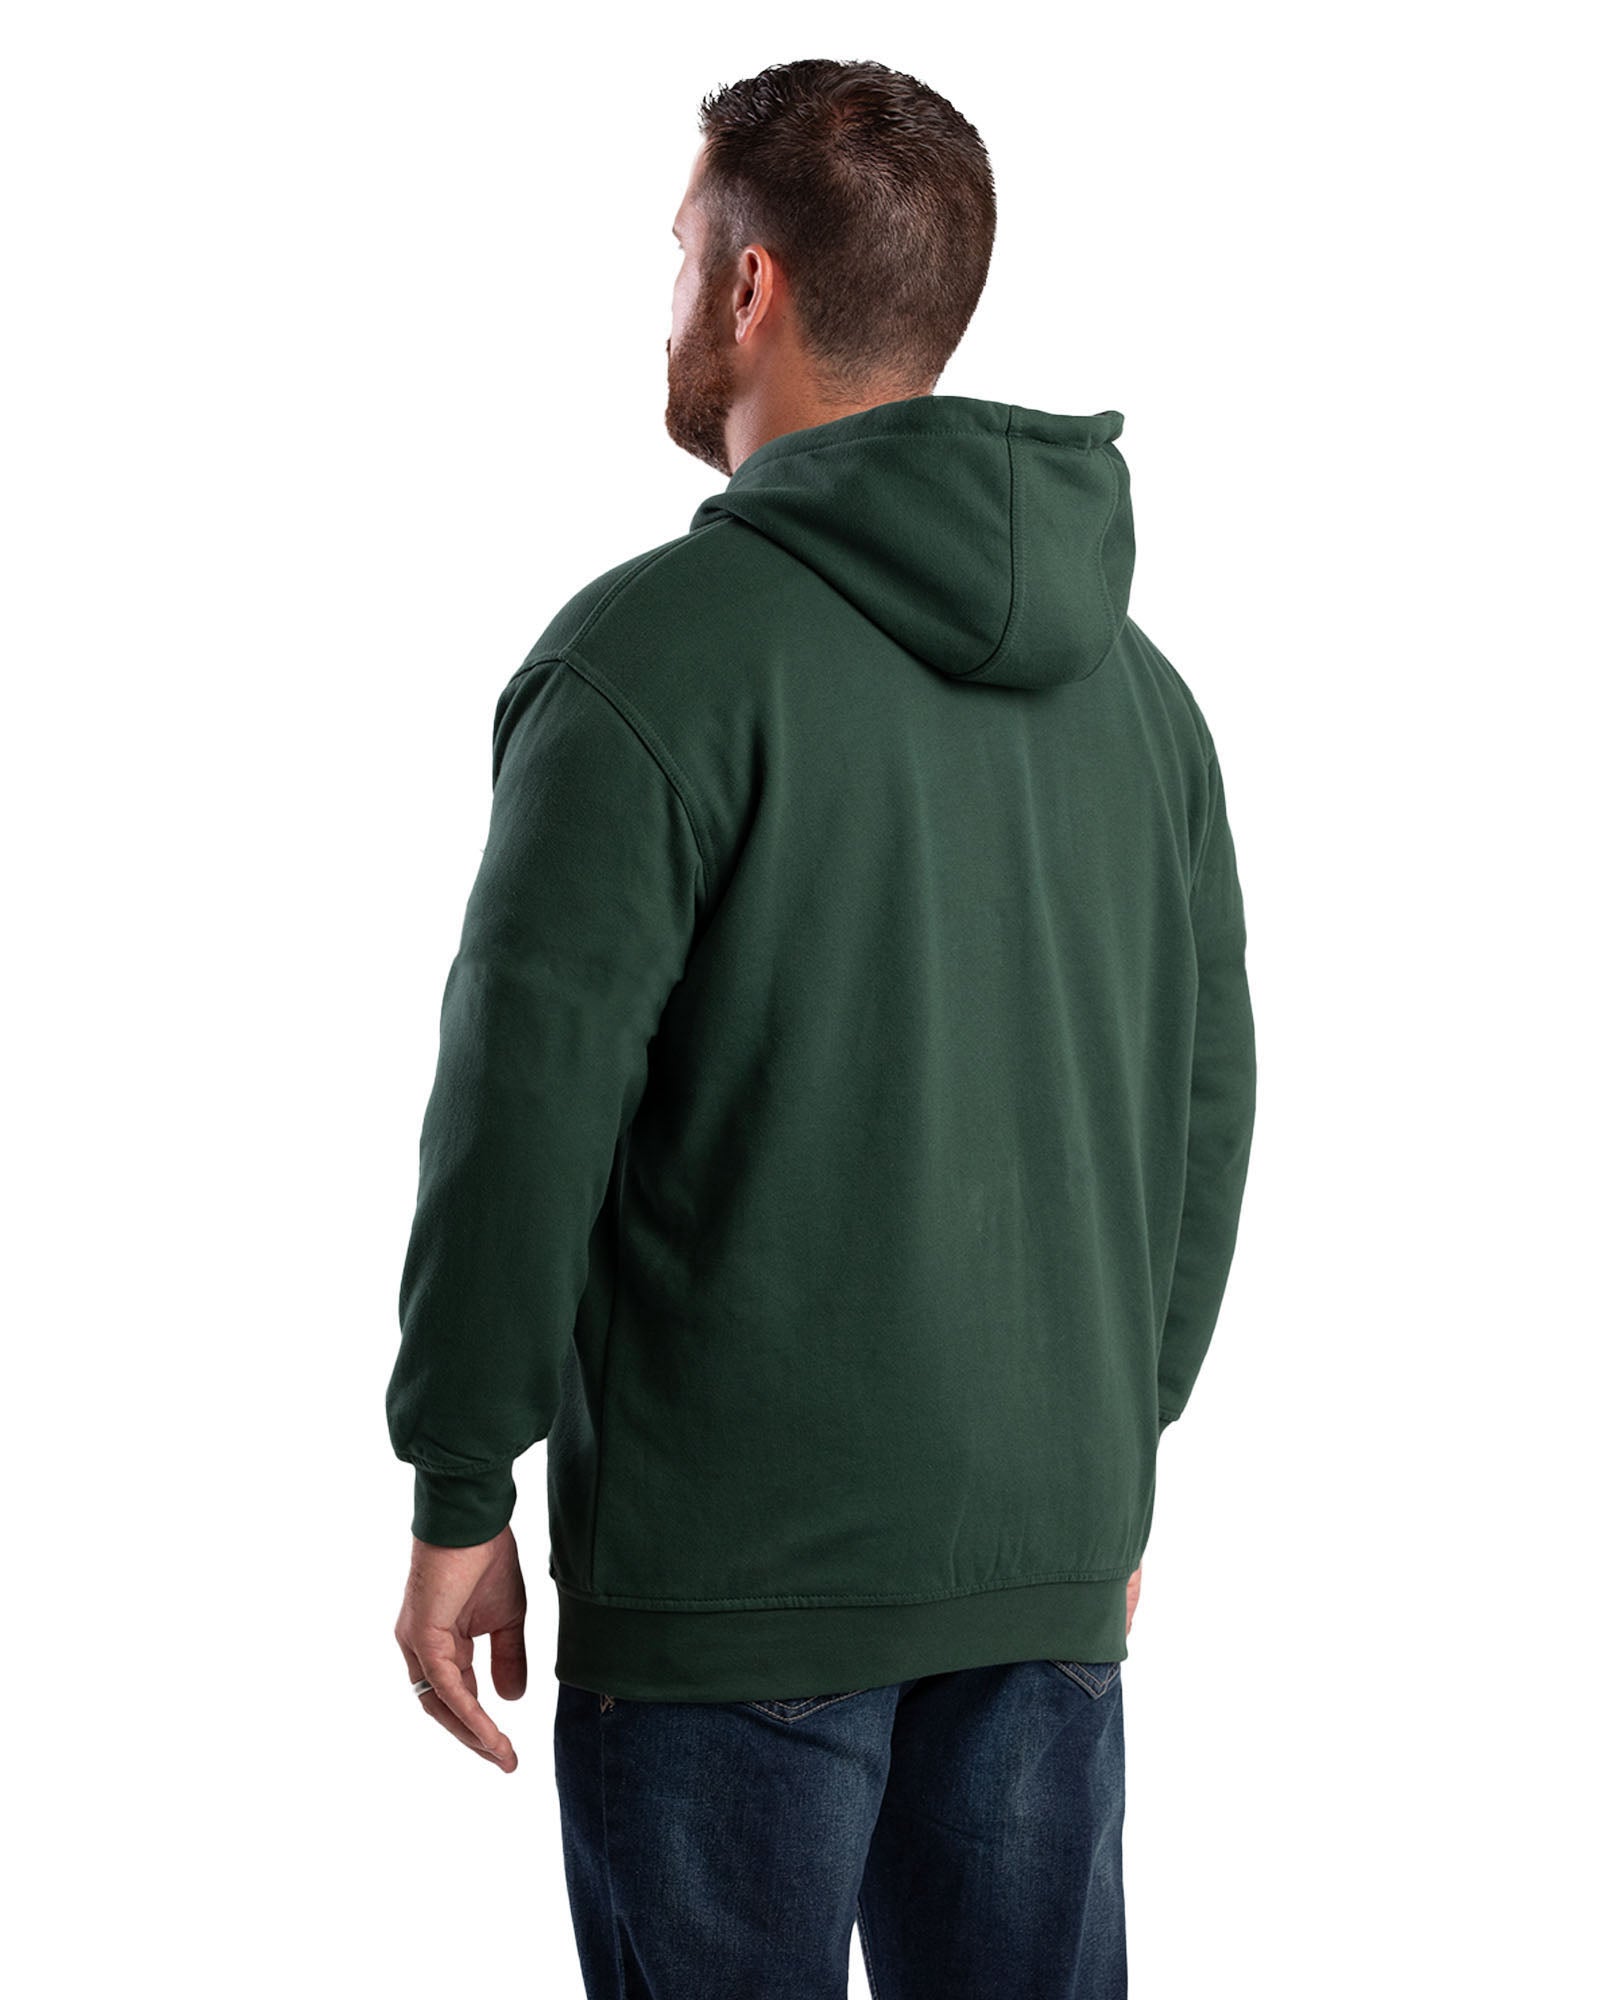 SZ101GN Heritage Thermal-Lined Full-Zip Hooded Sweatshirt